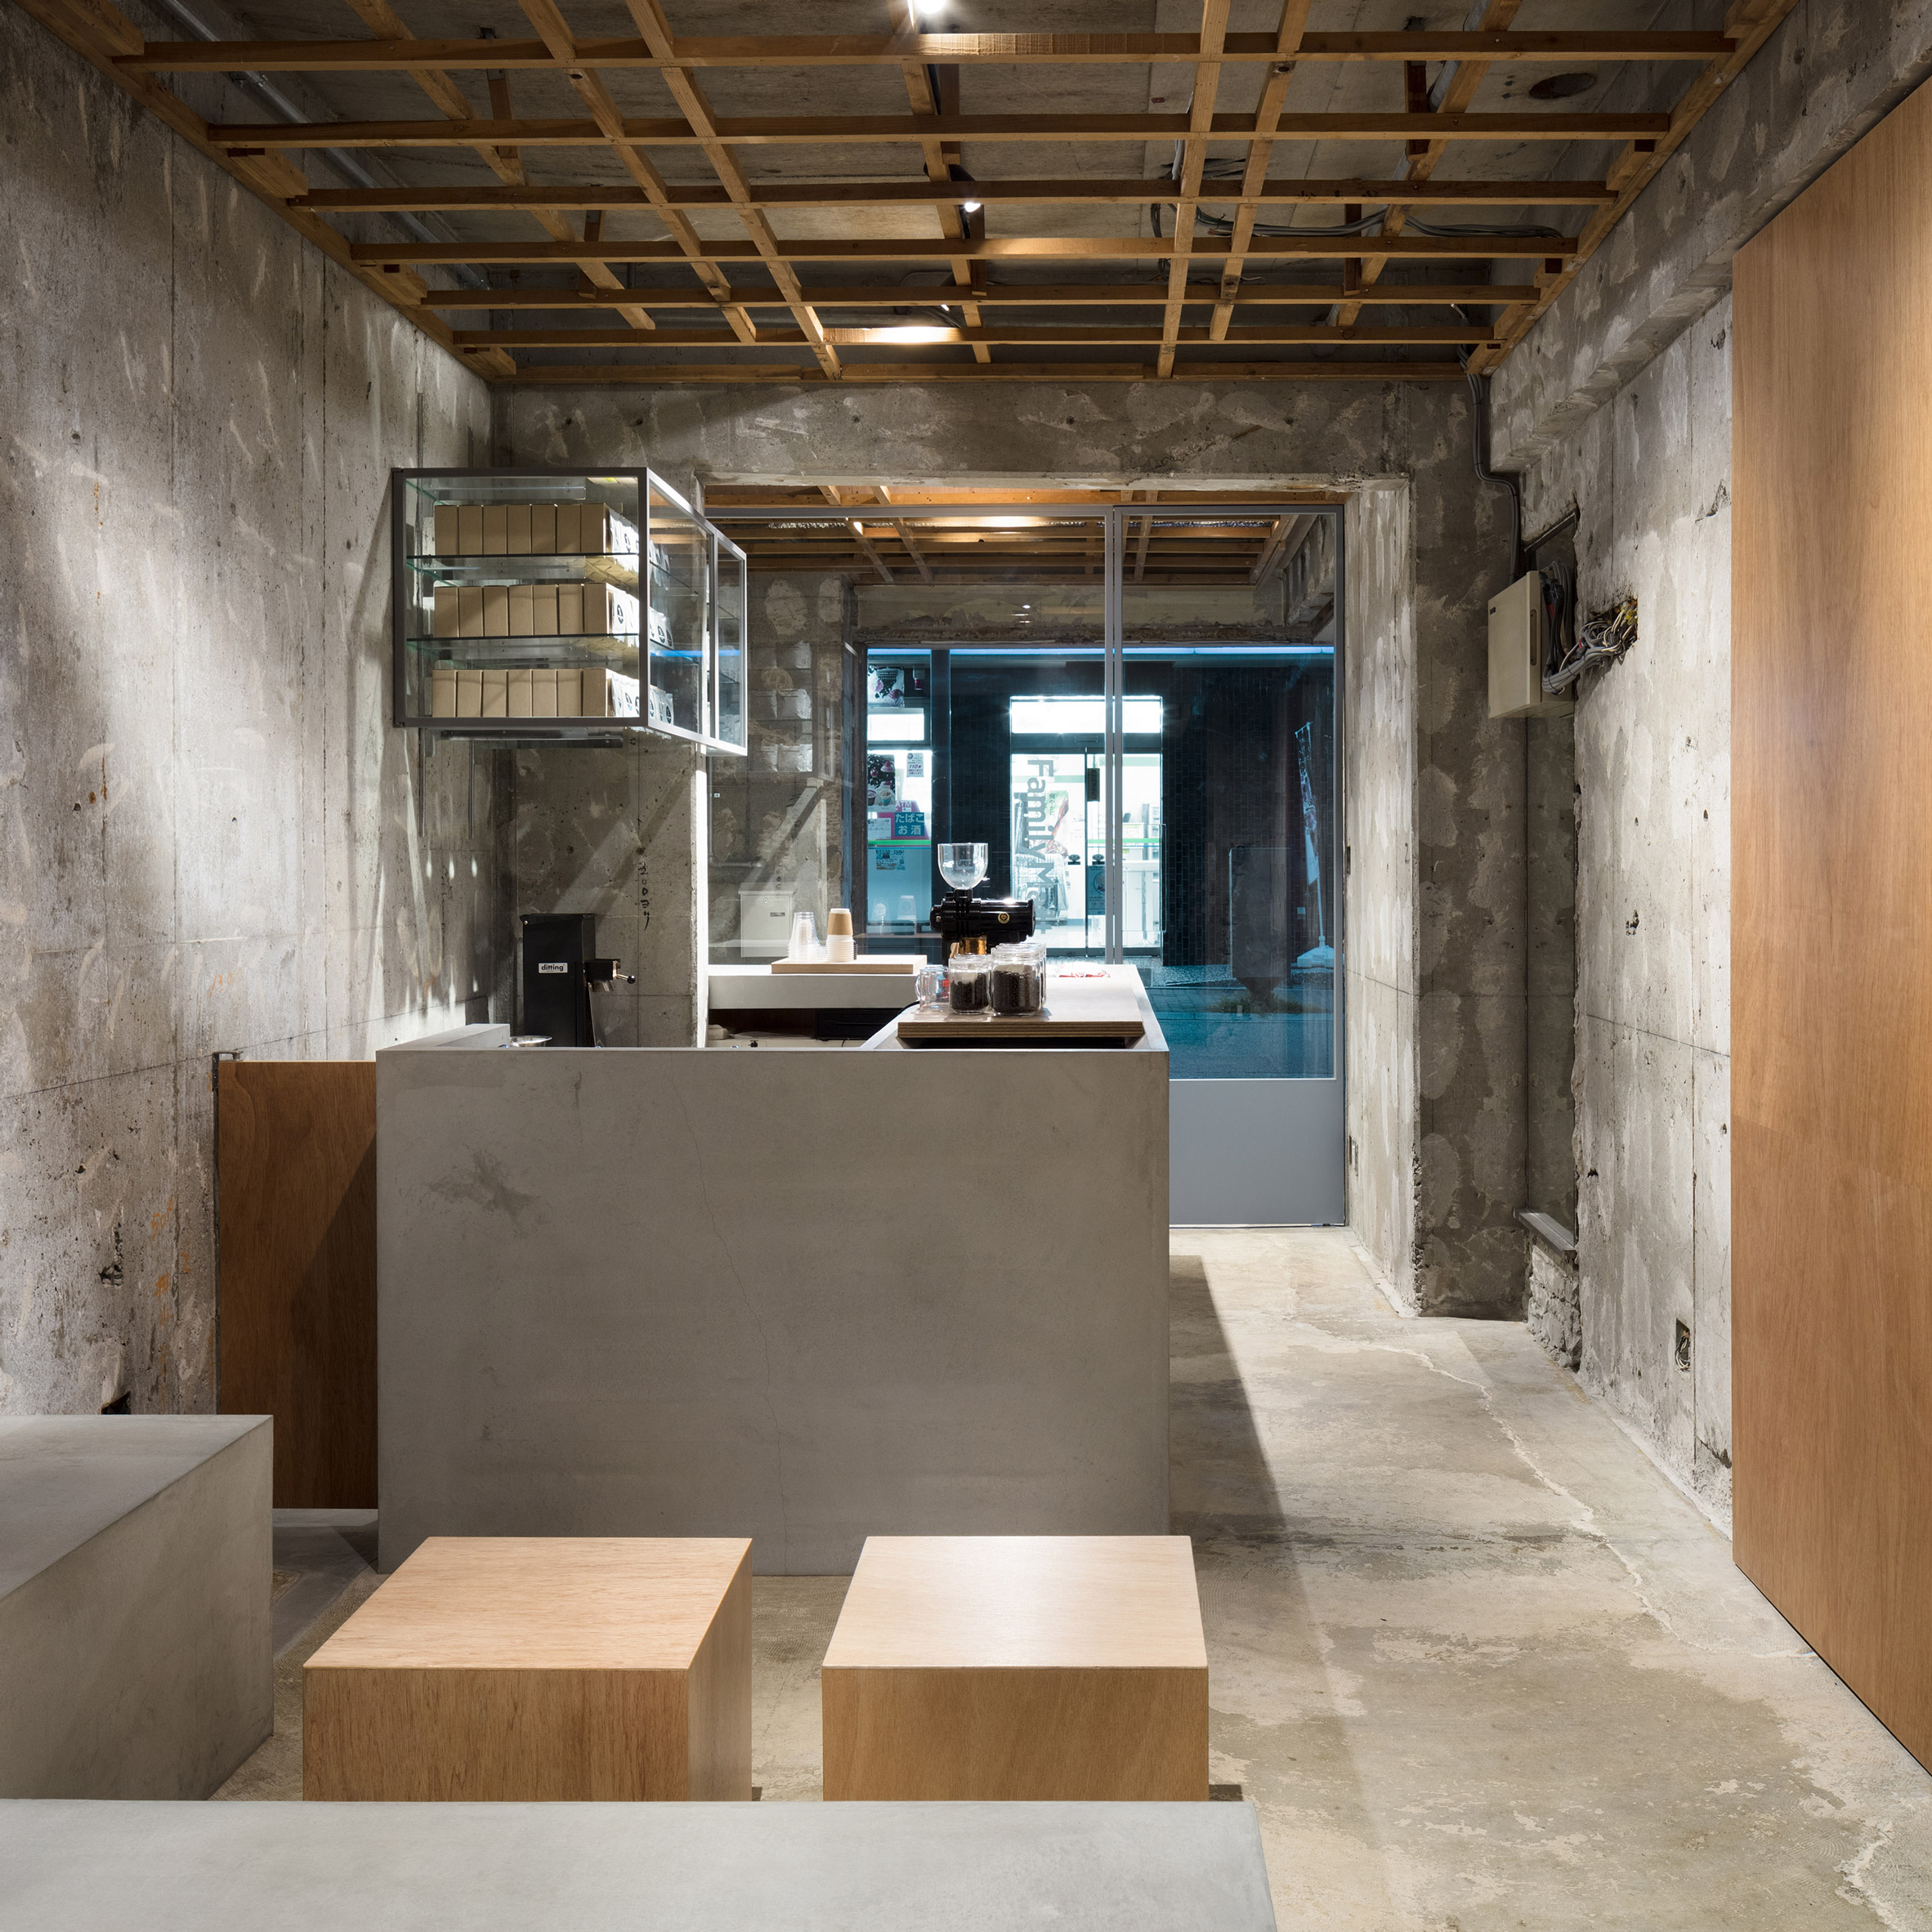 Yusuke Seki Creates Coffee Shop With Raw Concrete Walls In Kobe